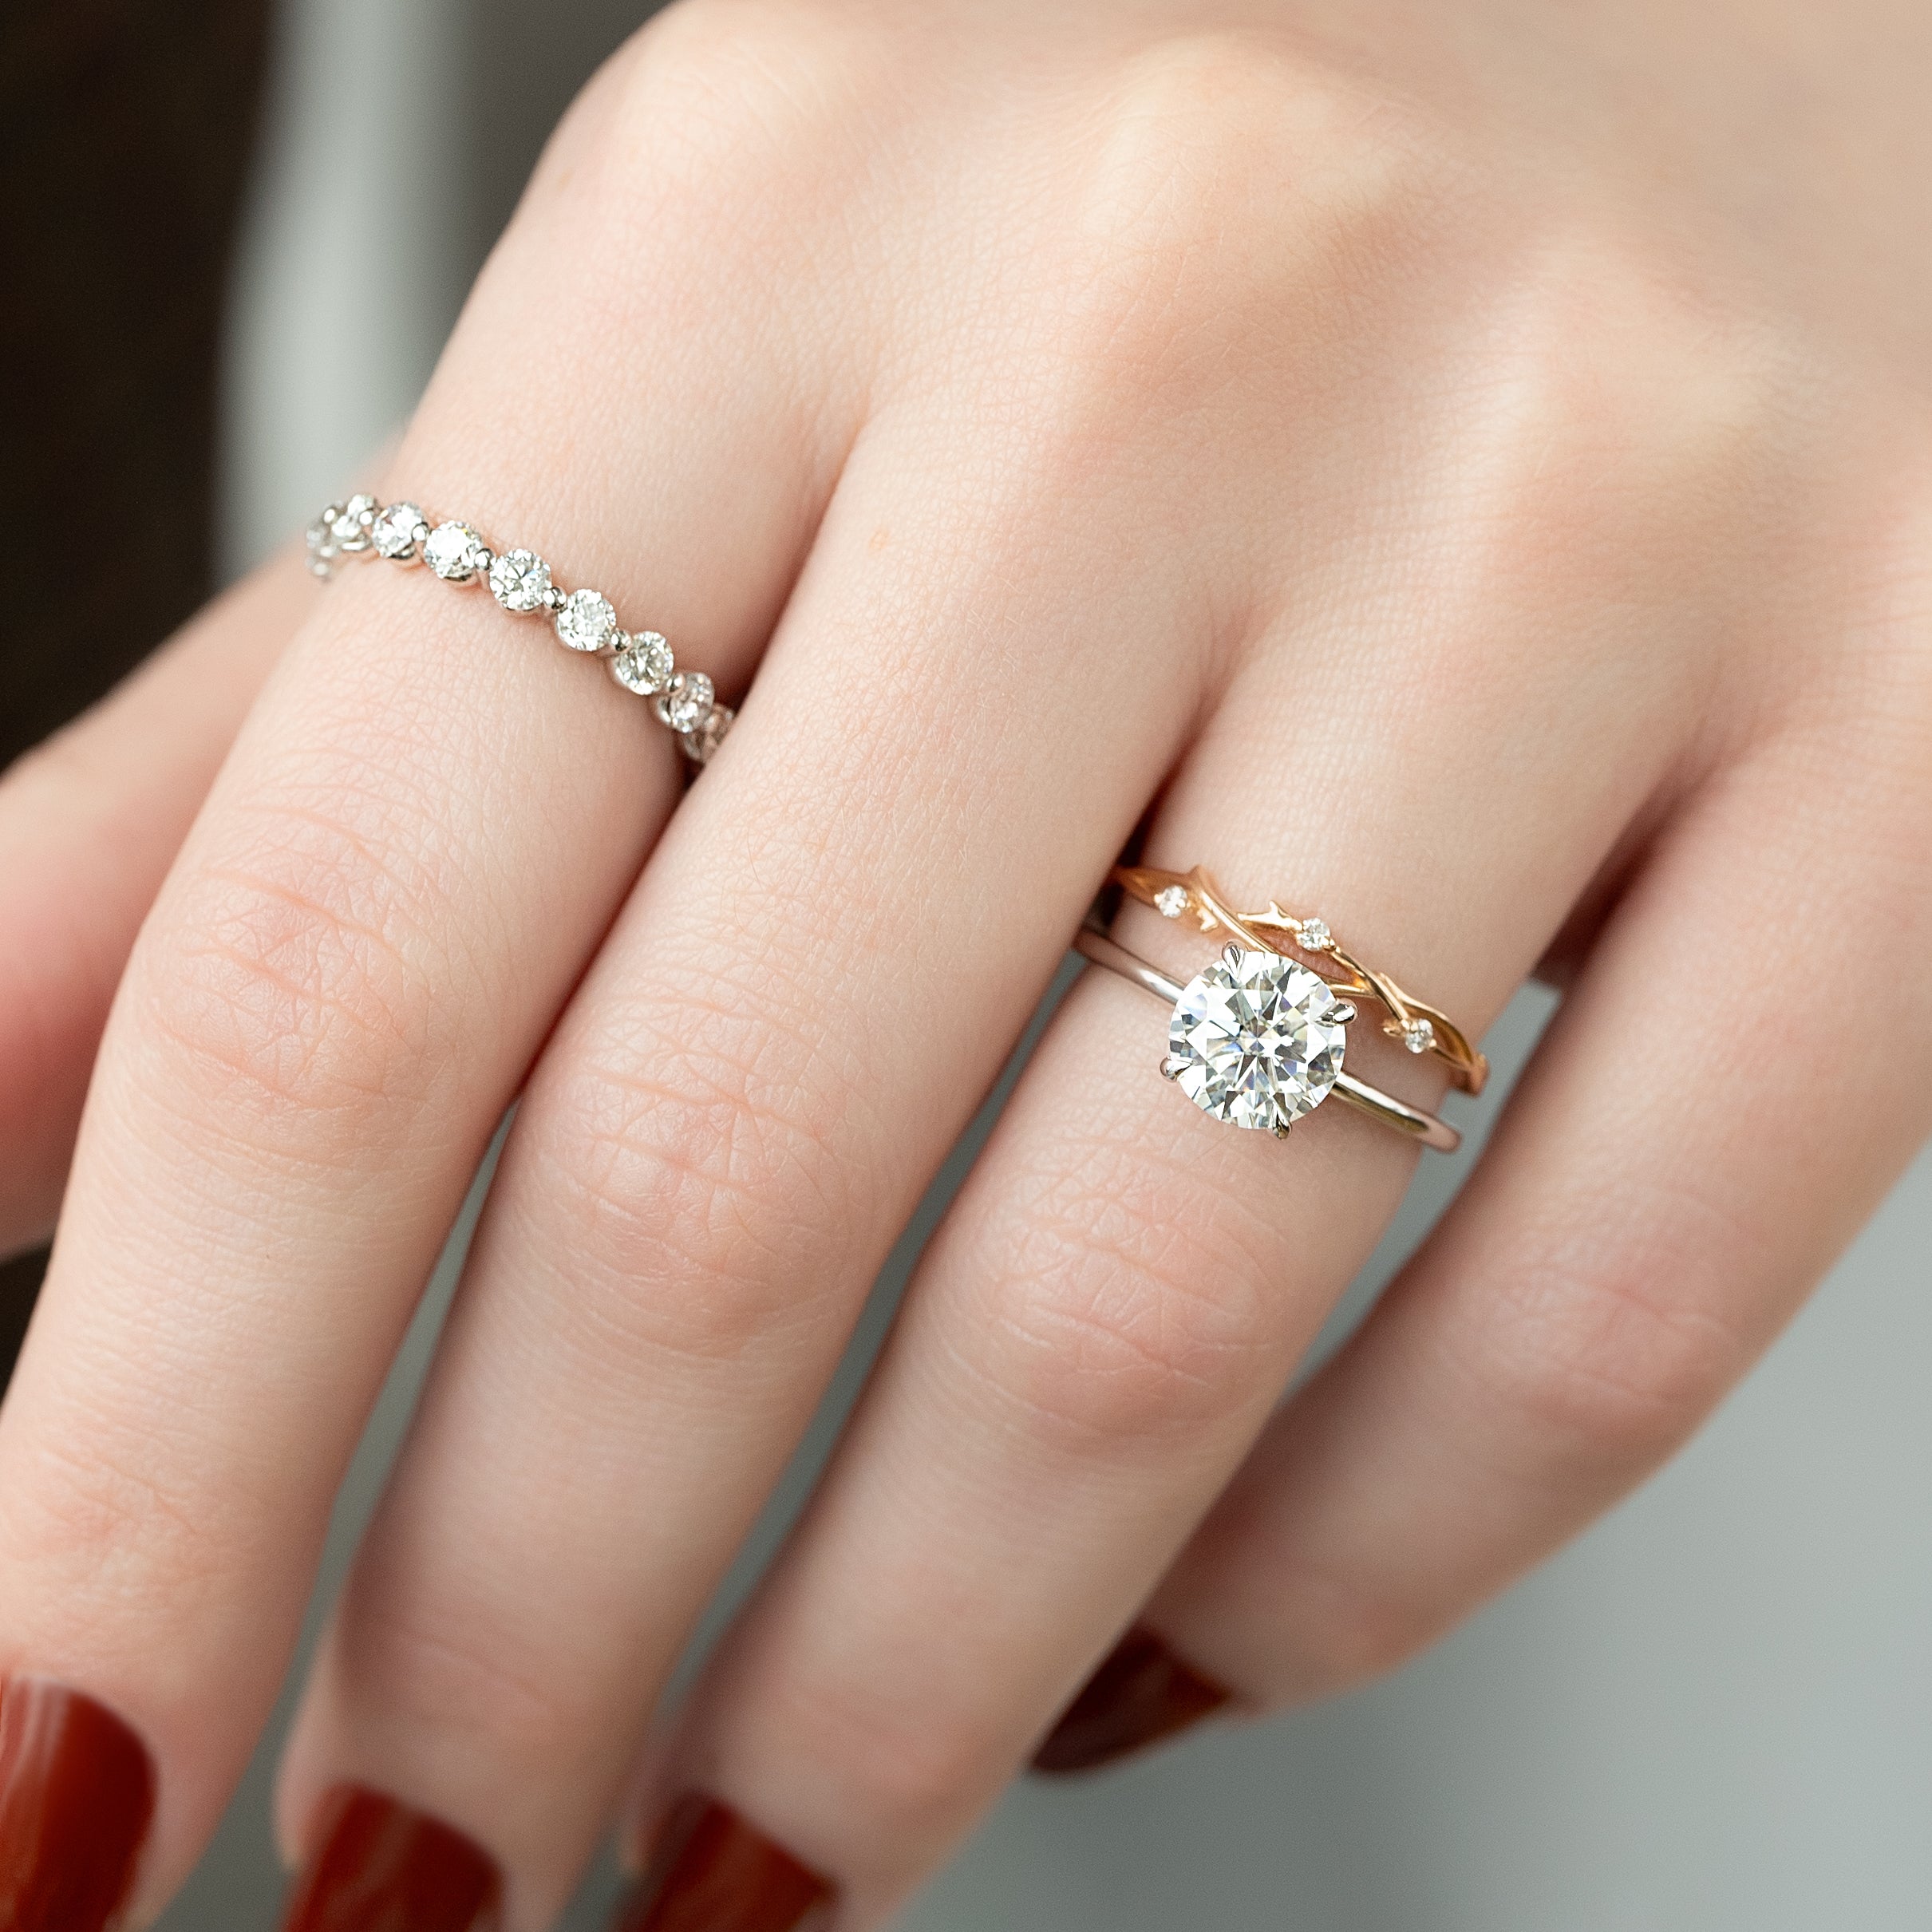 Shop Blue Diamond Wedding Rings | Leibish